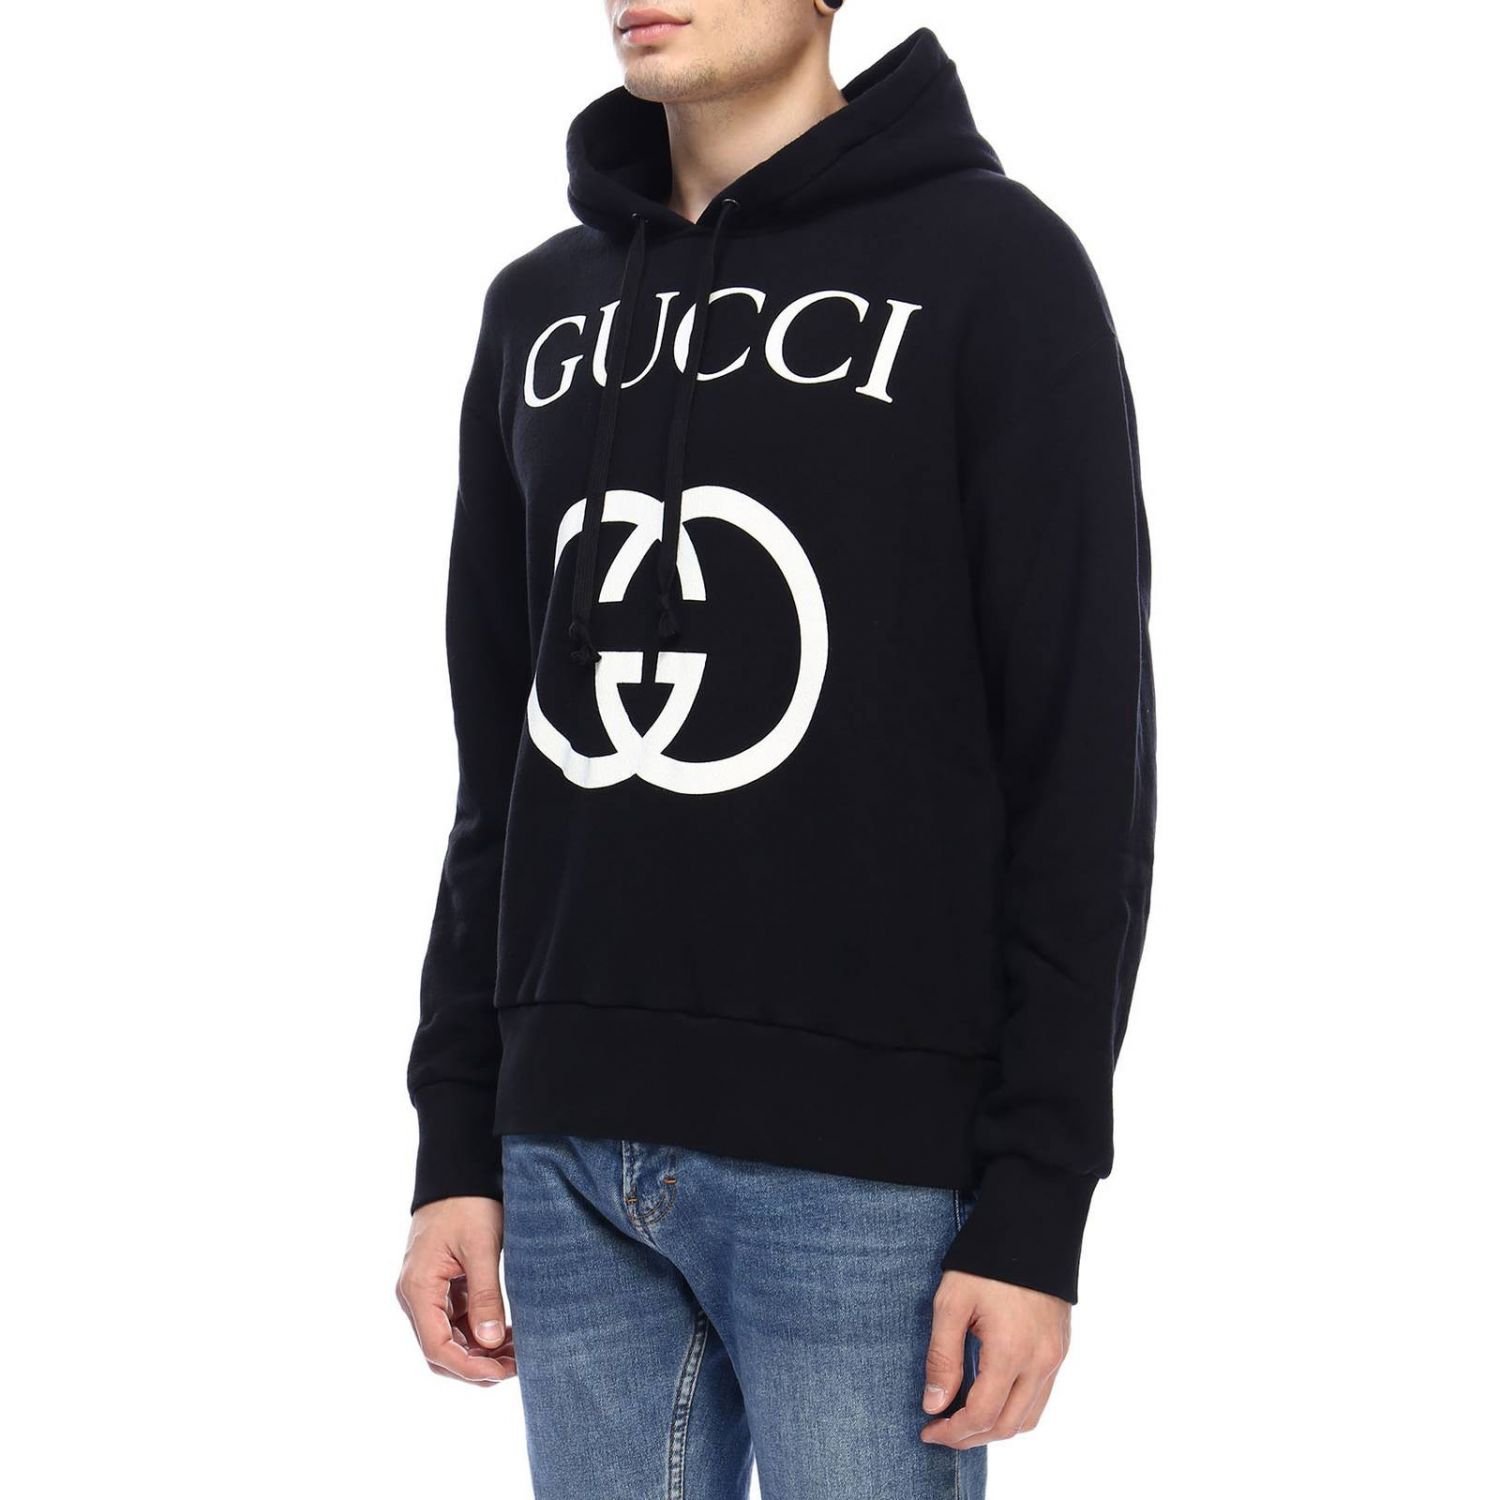 Sweater men Gucci